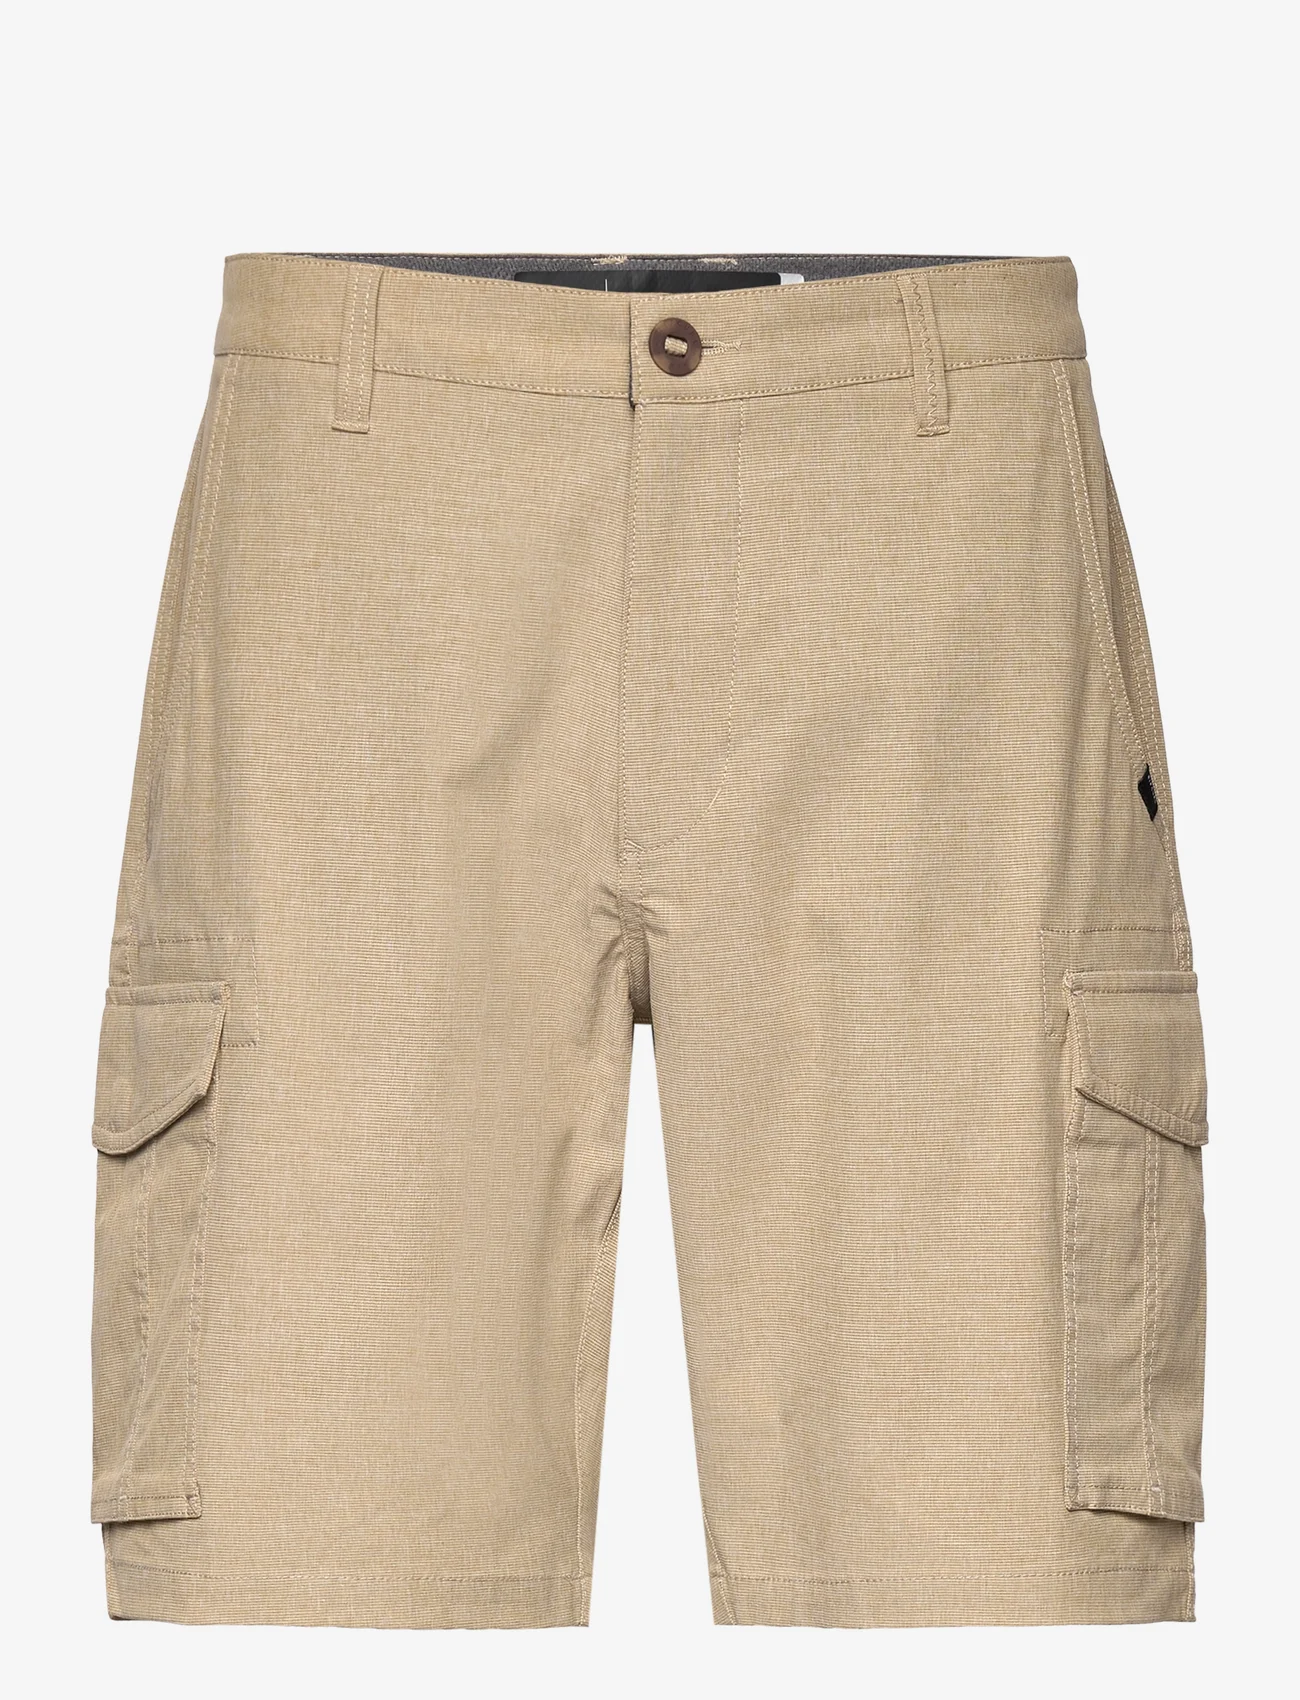 Rip Curl - BOARDWALK TRAIL CARGO - sports shorts - dark khaki - 0